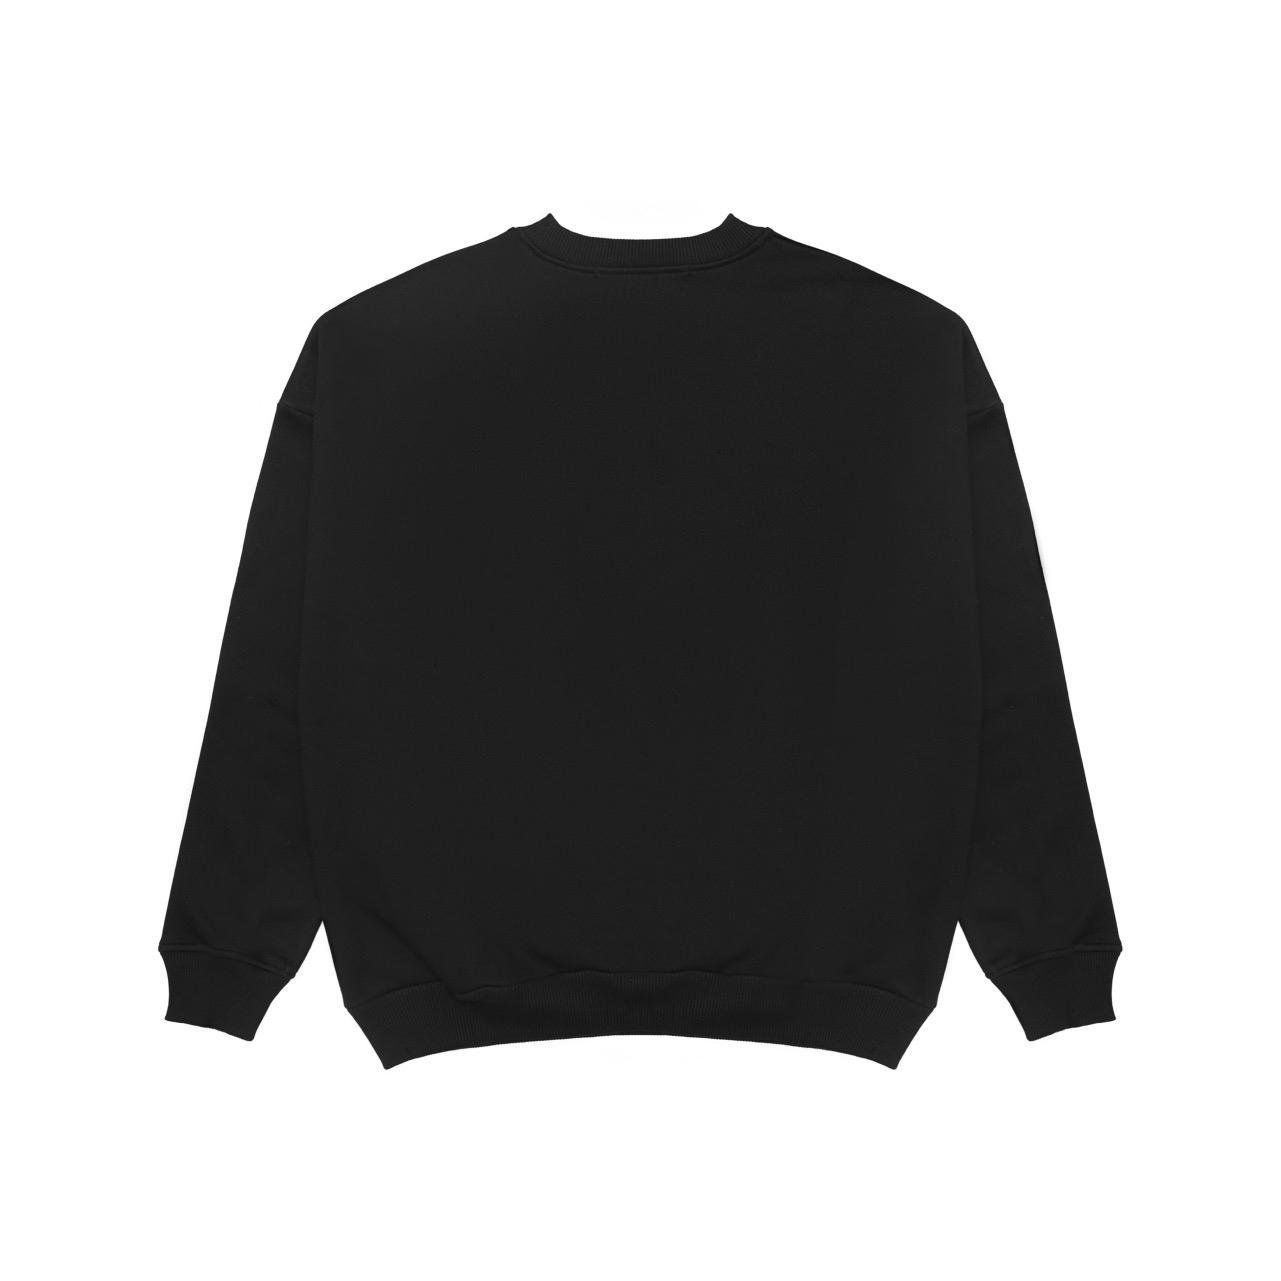  Áo Sweater Boxy Màu Đen | NAGO SWEATER 